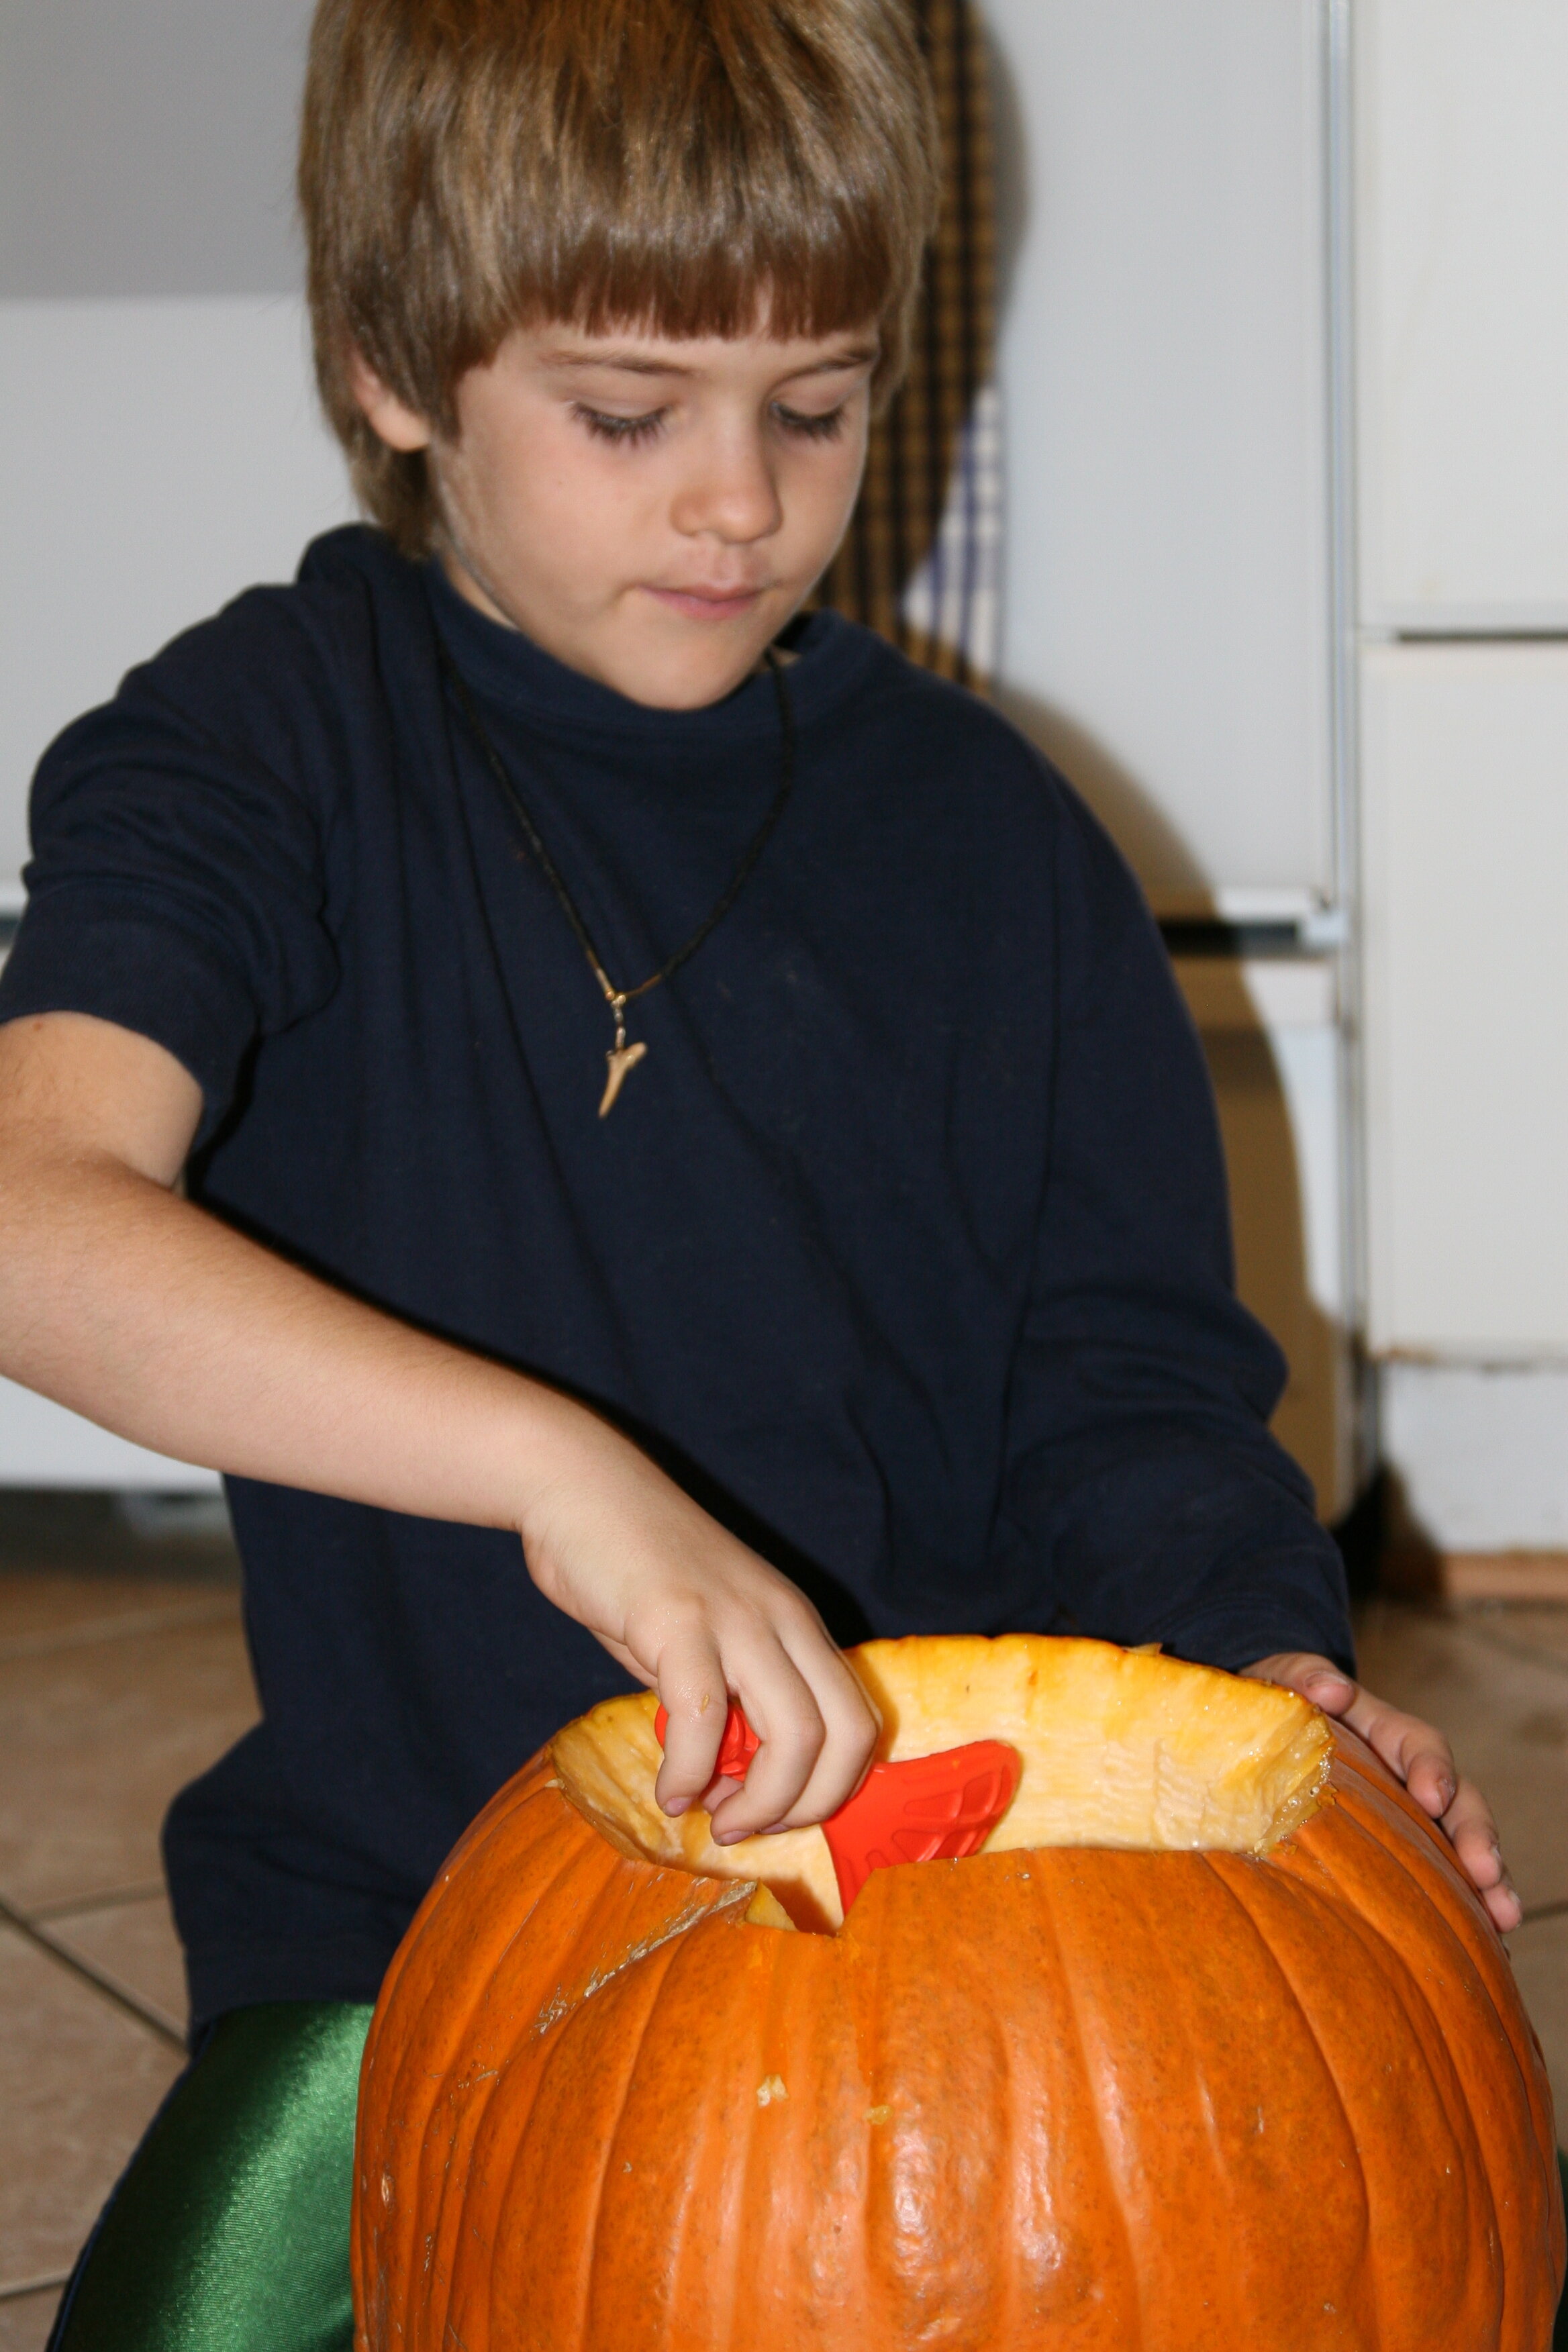 Carving the pumpkins